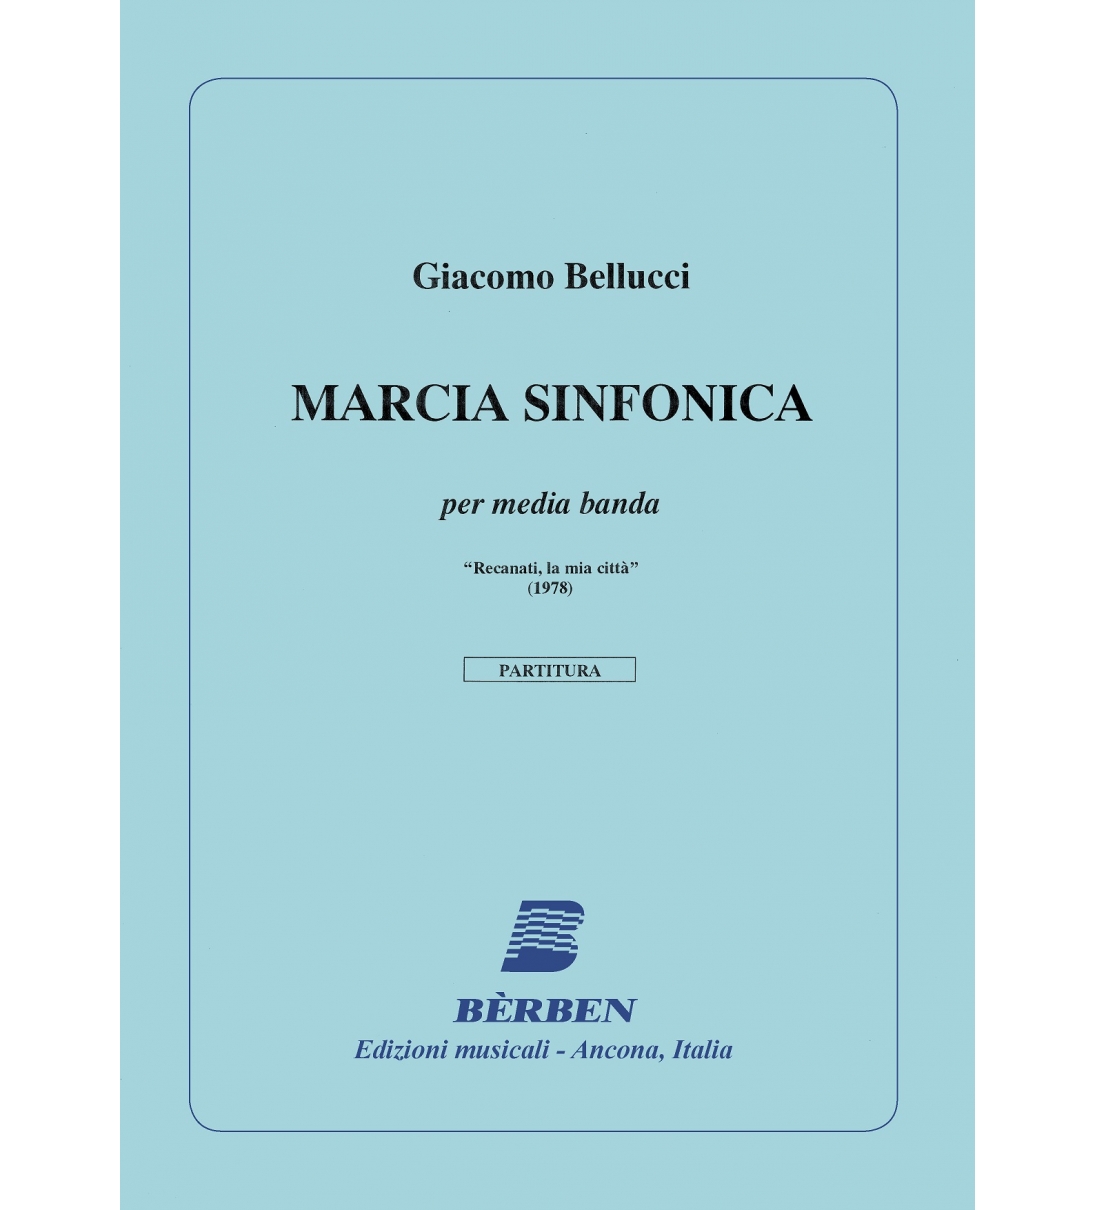 Marcia sinfonica